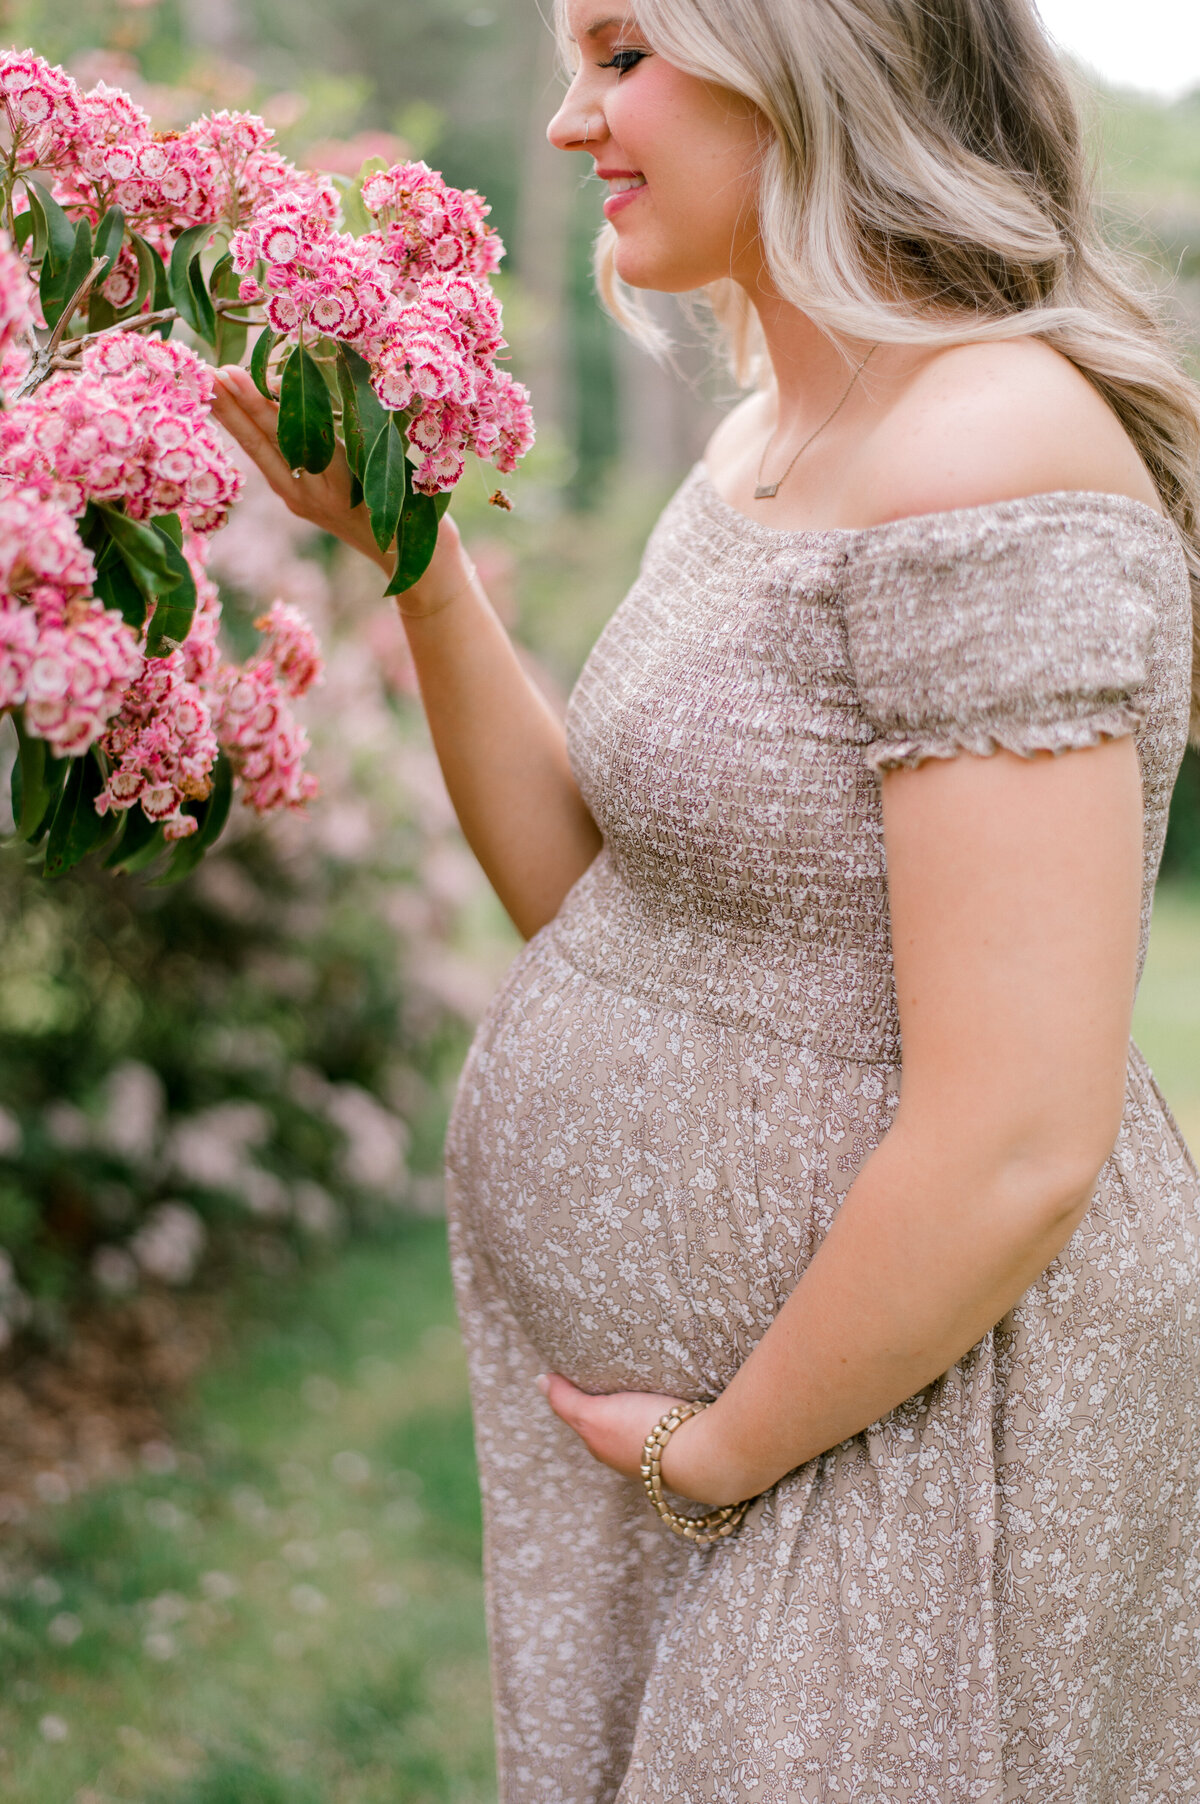 Cleveland Maternity Photographer | Brittany Serowski Photography